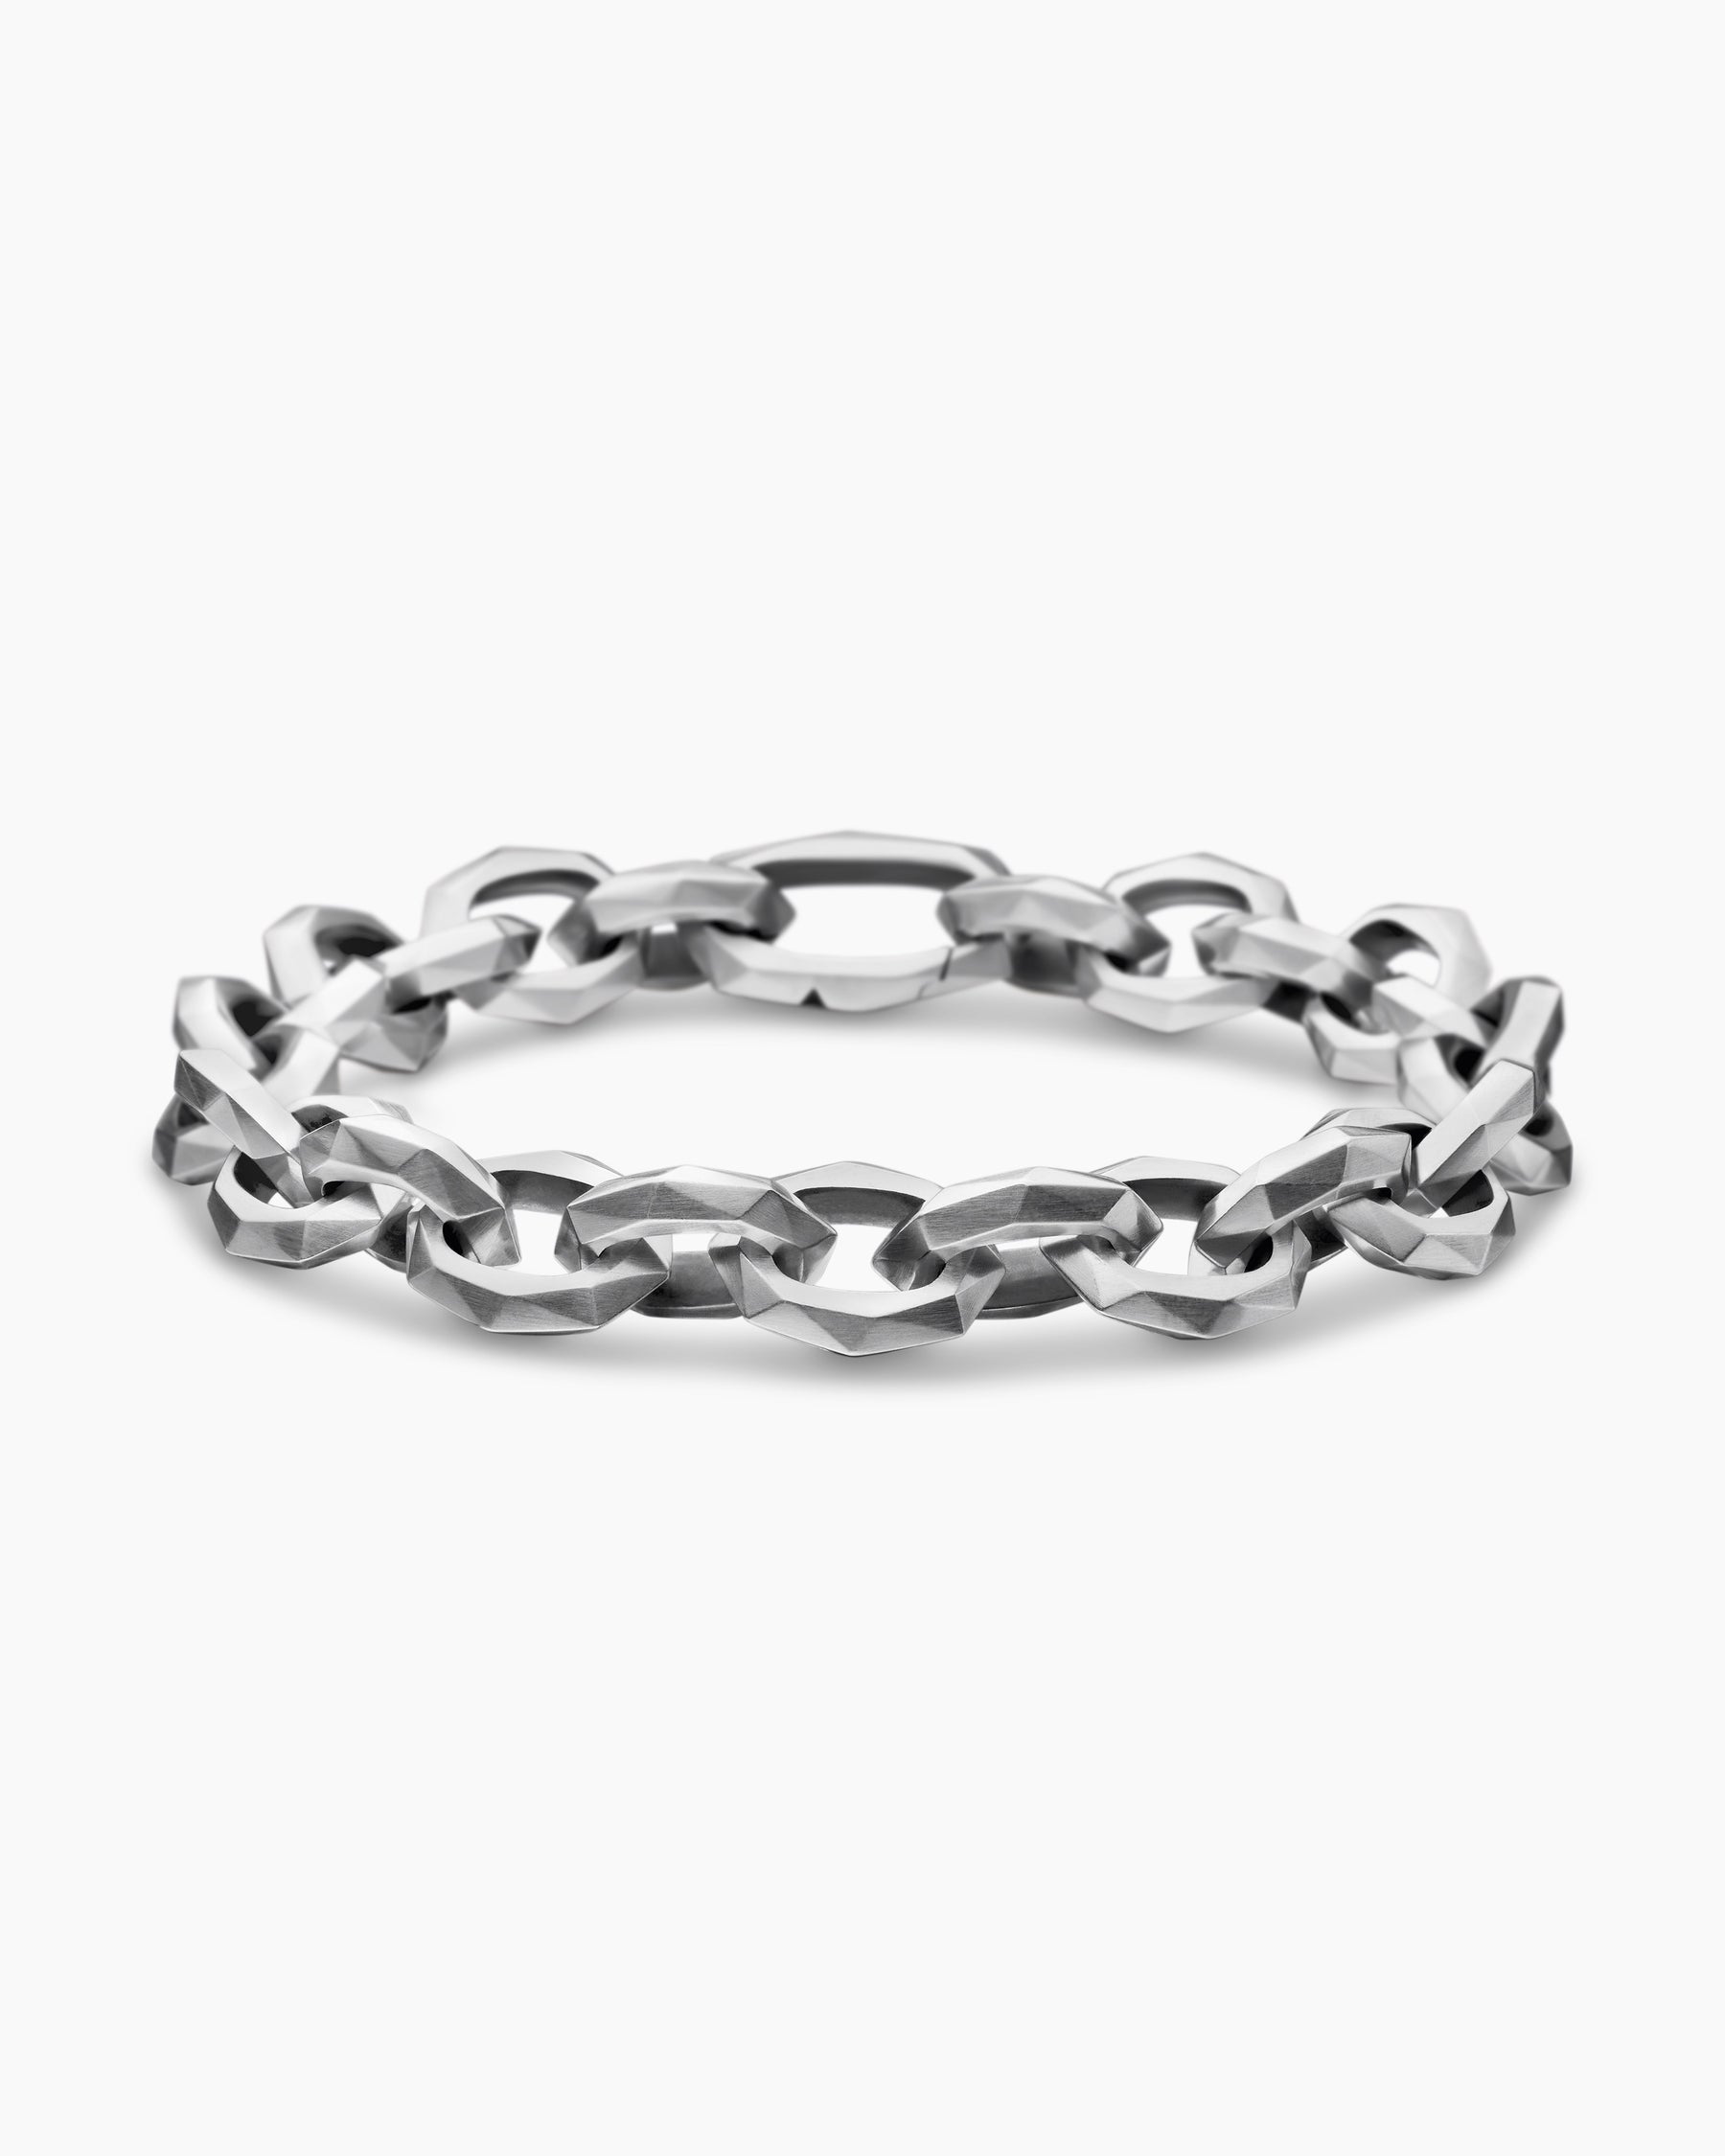 Torqued Faceted Chain Link Bracelet in Sterling Silver, 11.6mm